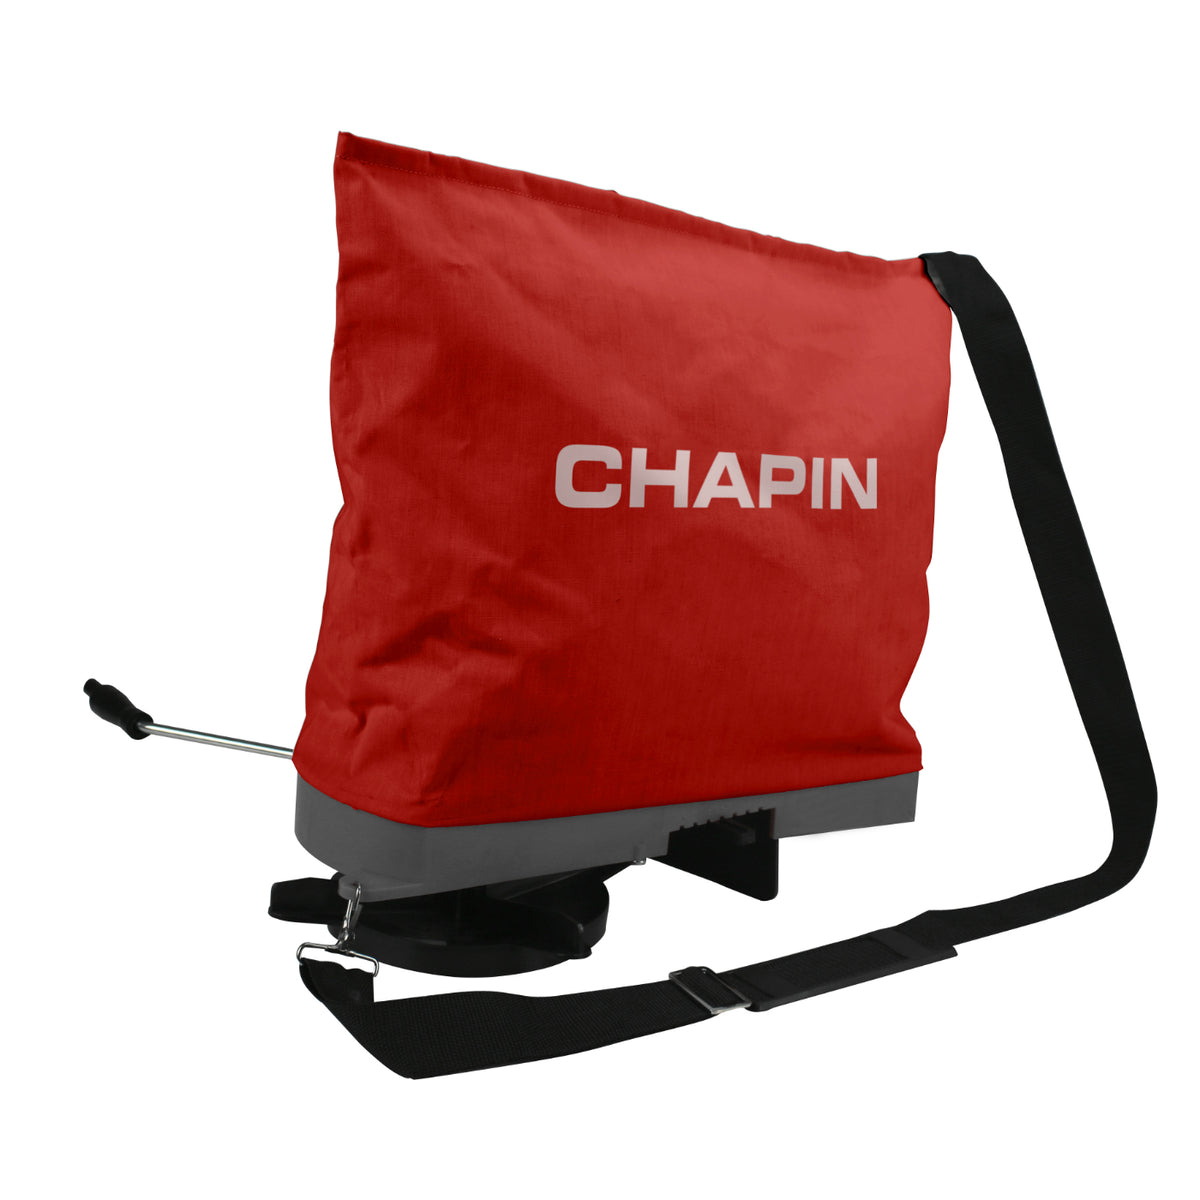 Chapin 84700A SureSpread Professional Bag Seeder, 25 Lb Capacity, Metal/Plastic